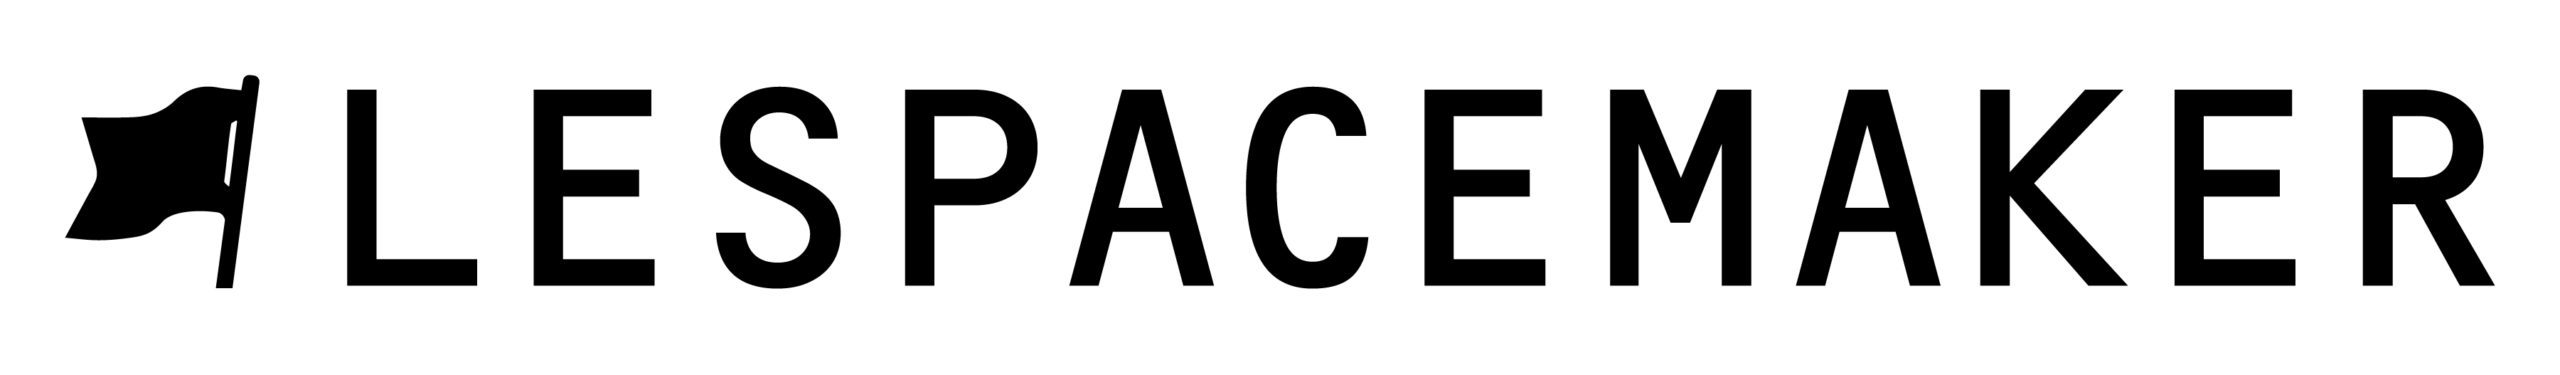 lespacemaker logo